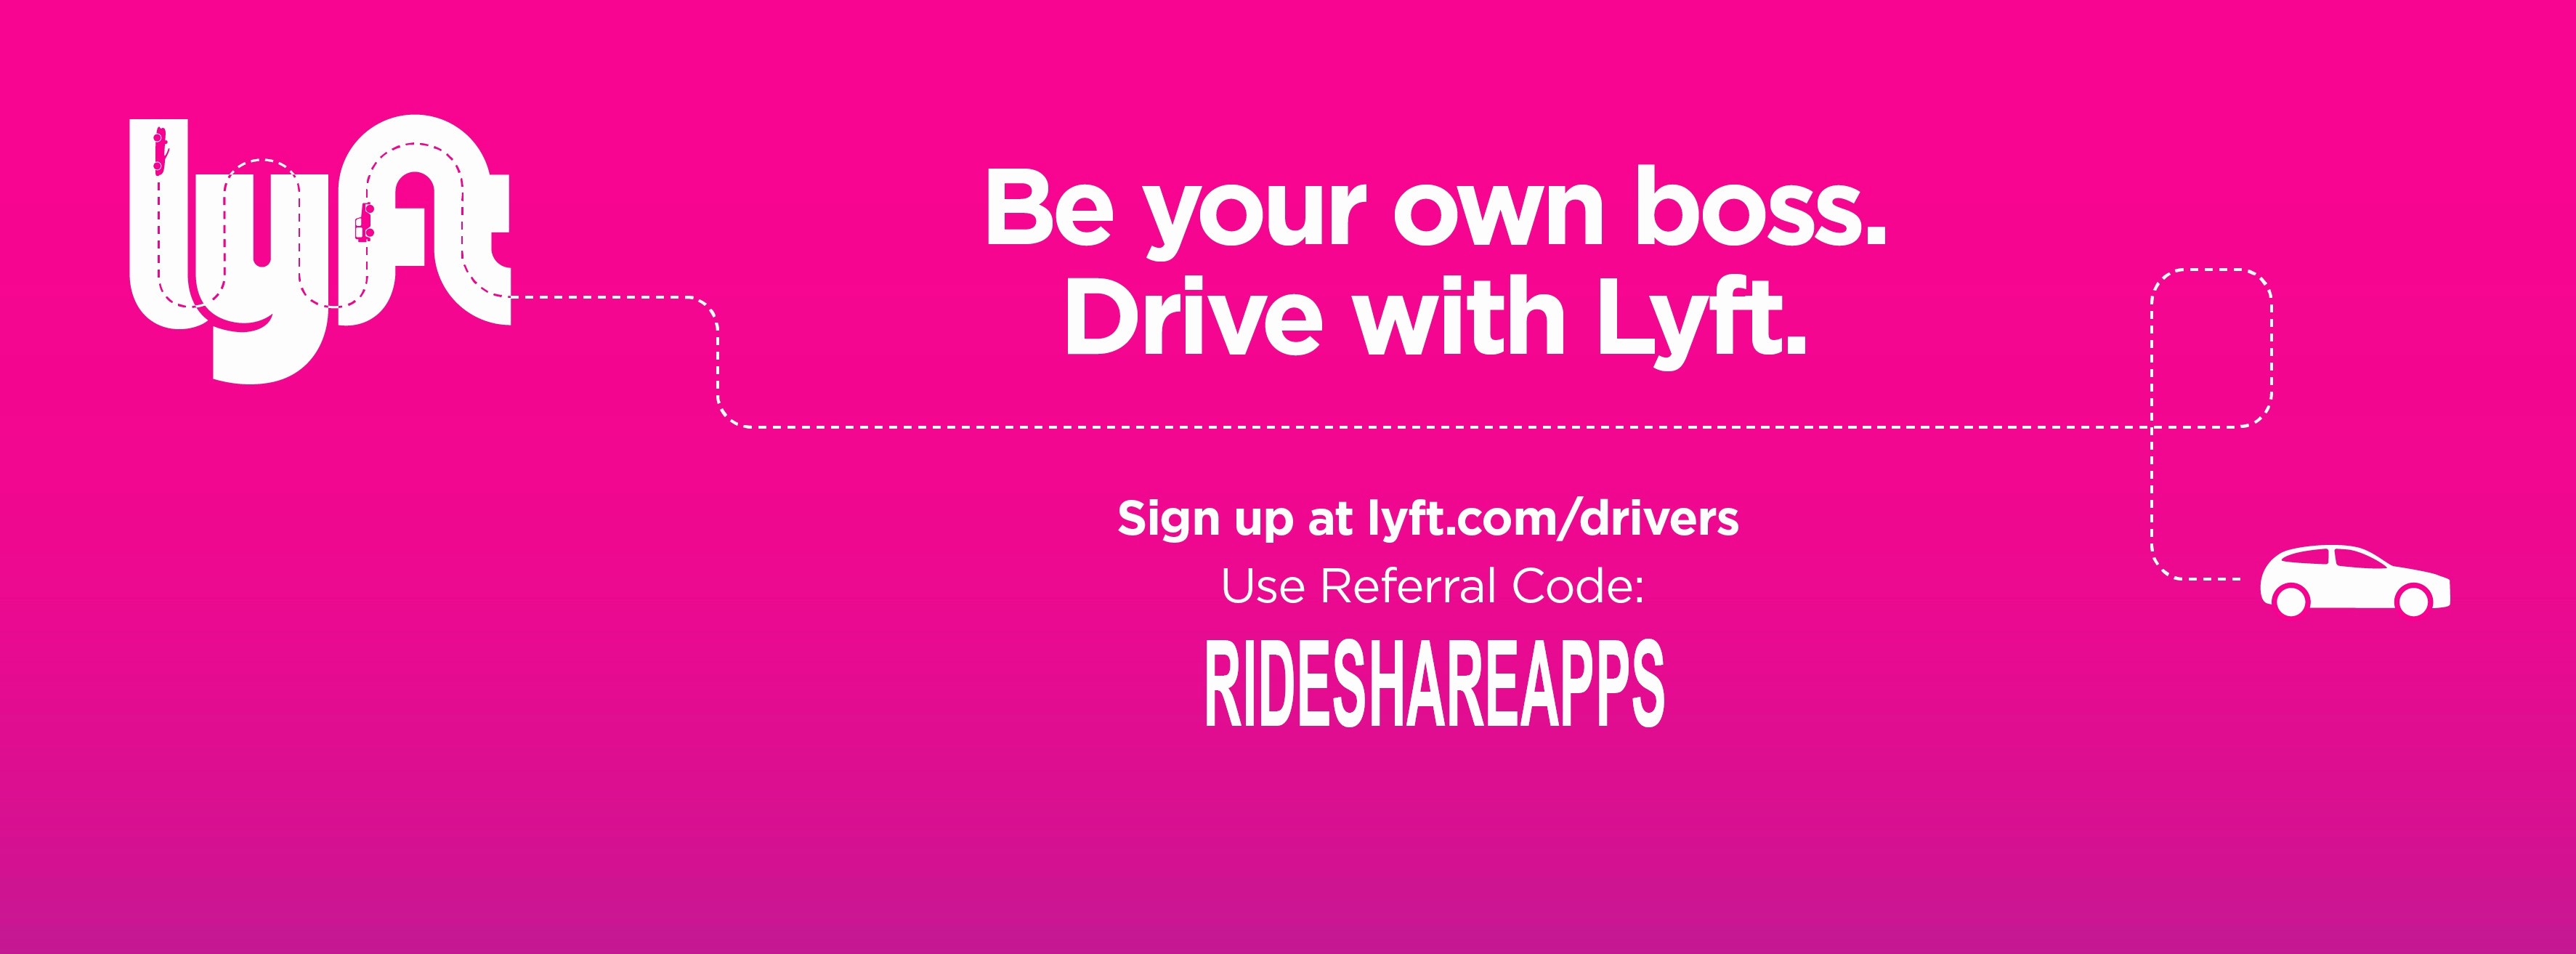 Lyft California Inspection Form Brilliant Inspirational Uber Driver Document Business Cards